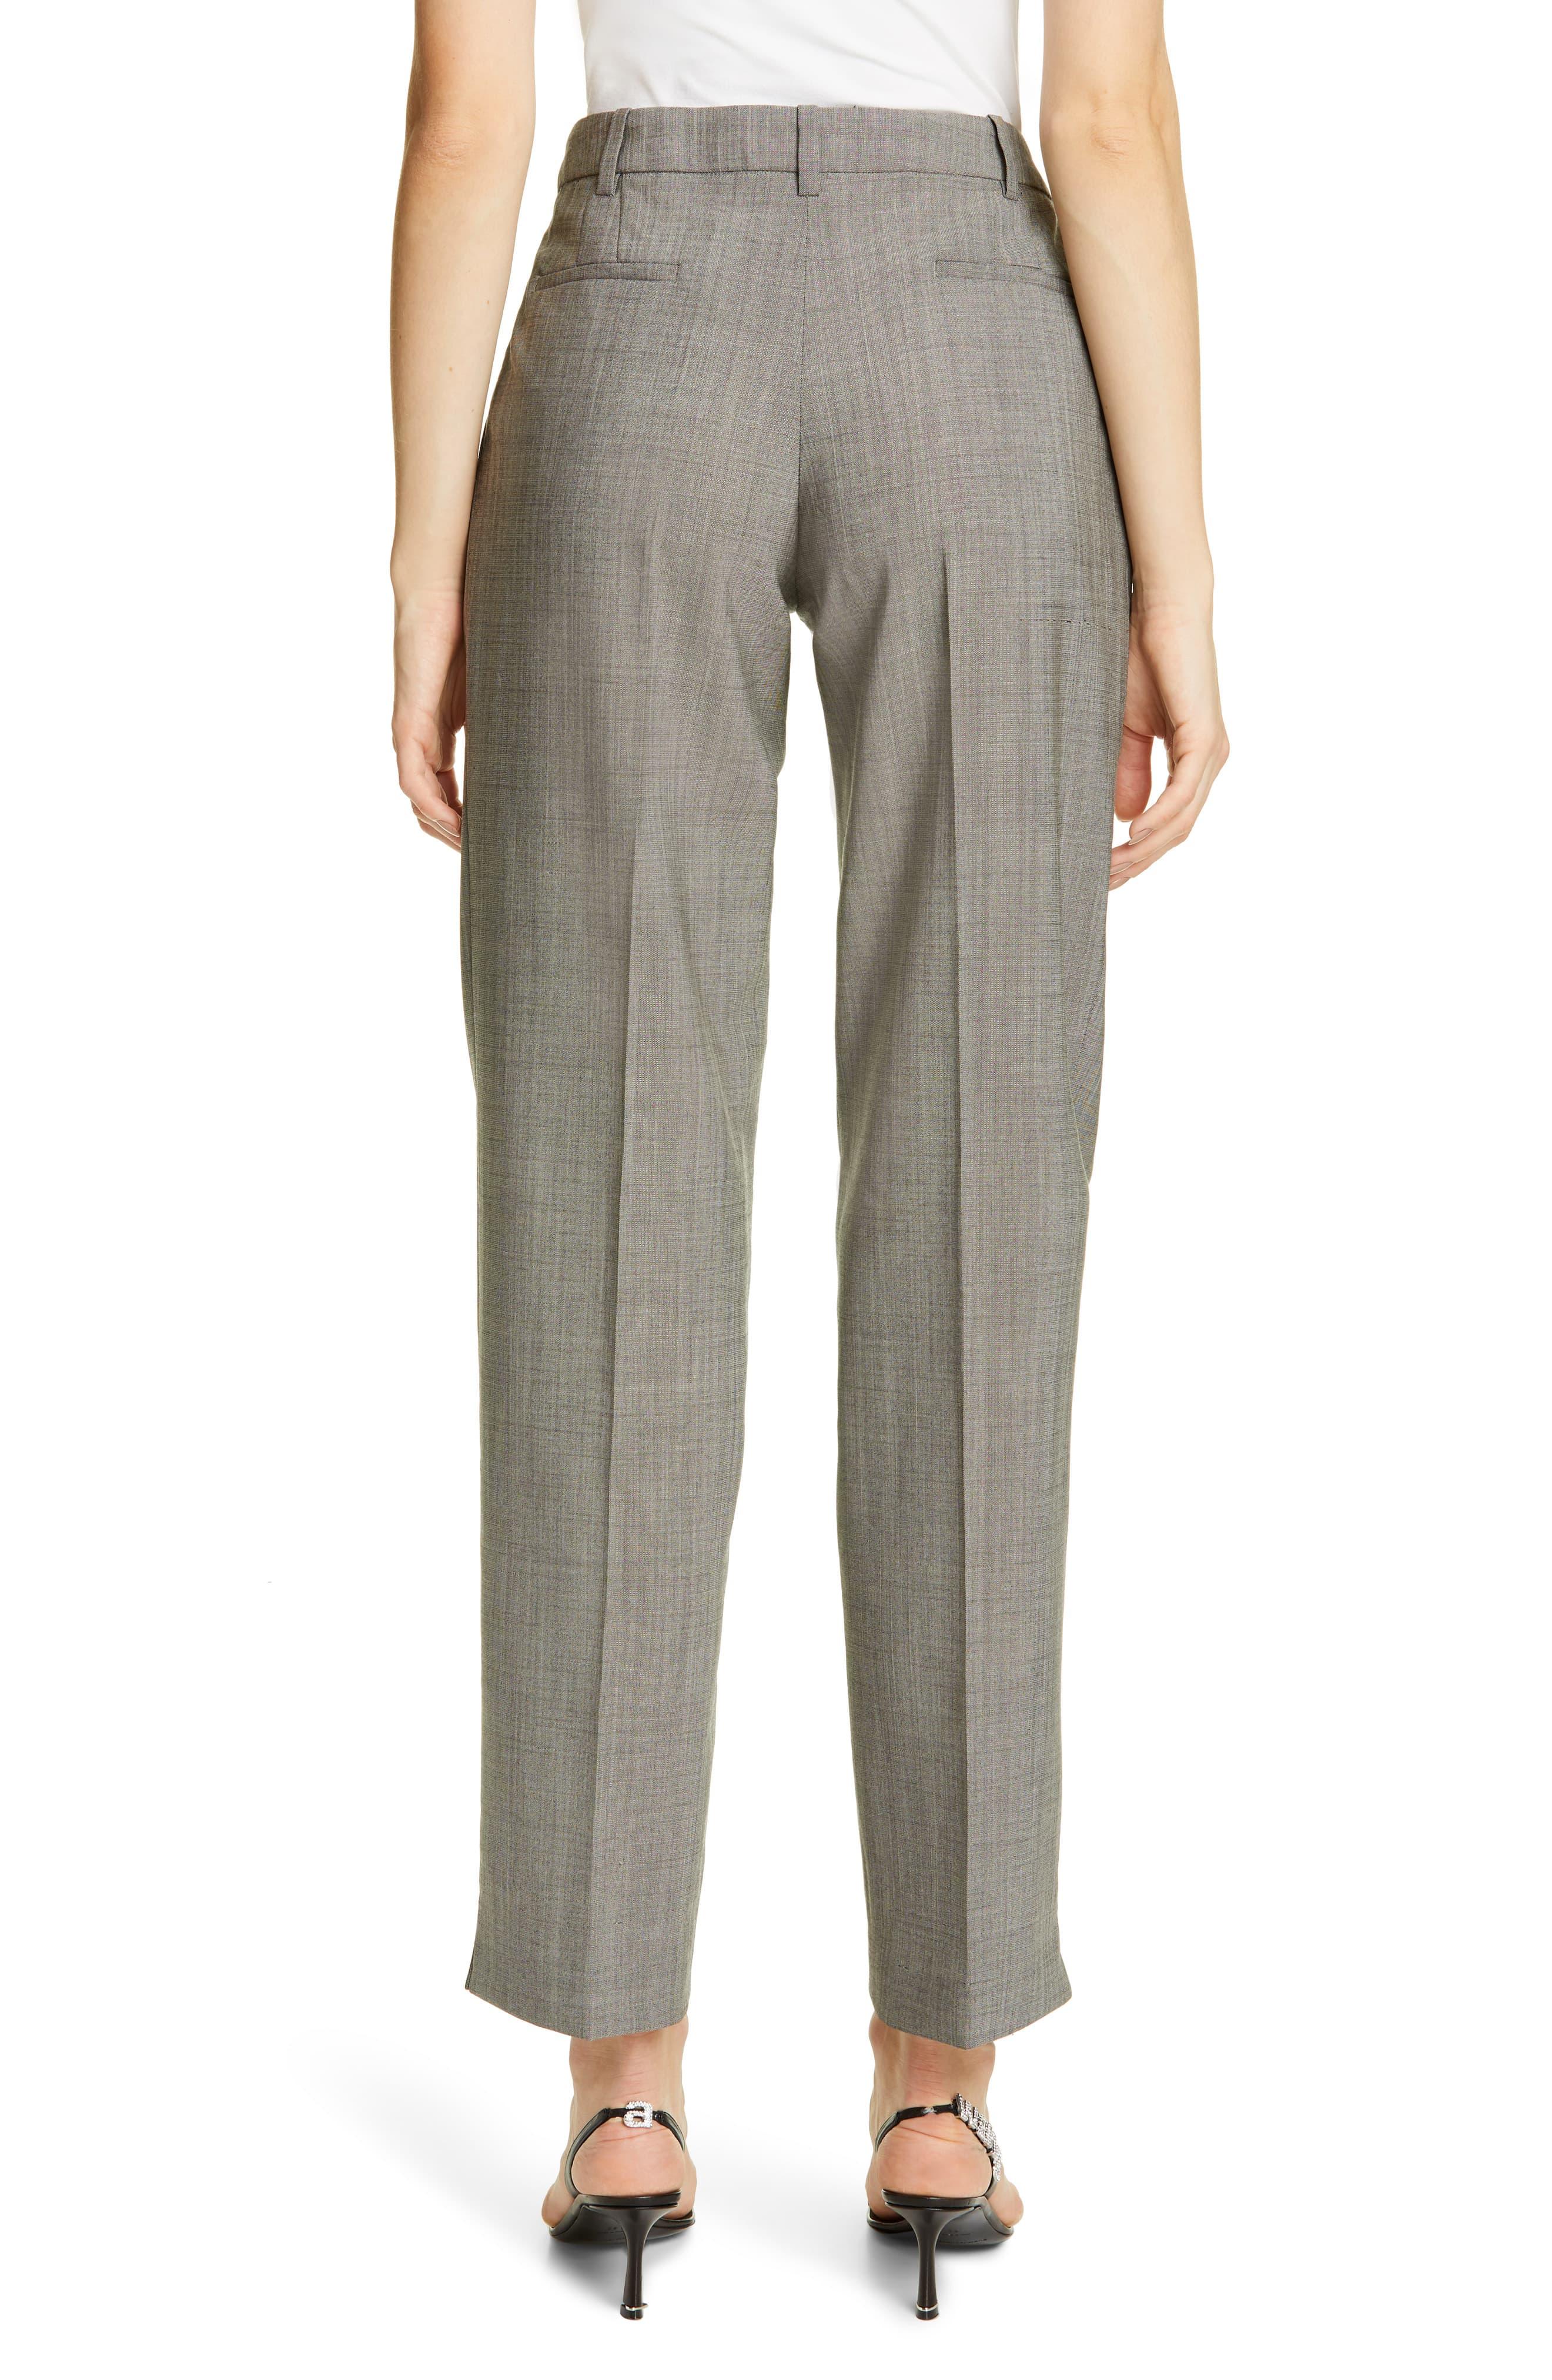 Alexander Wang Wool & Mohair Blend Trousers in Grey (Gray) - Lyst